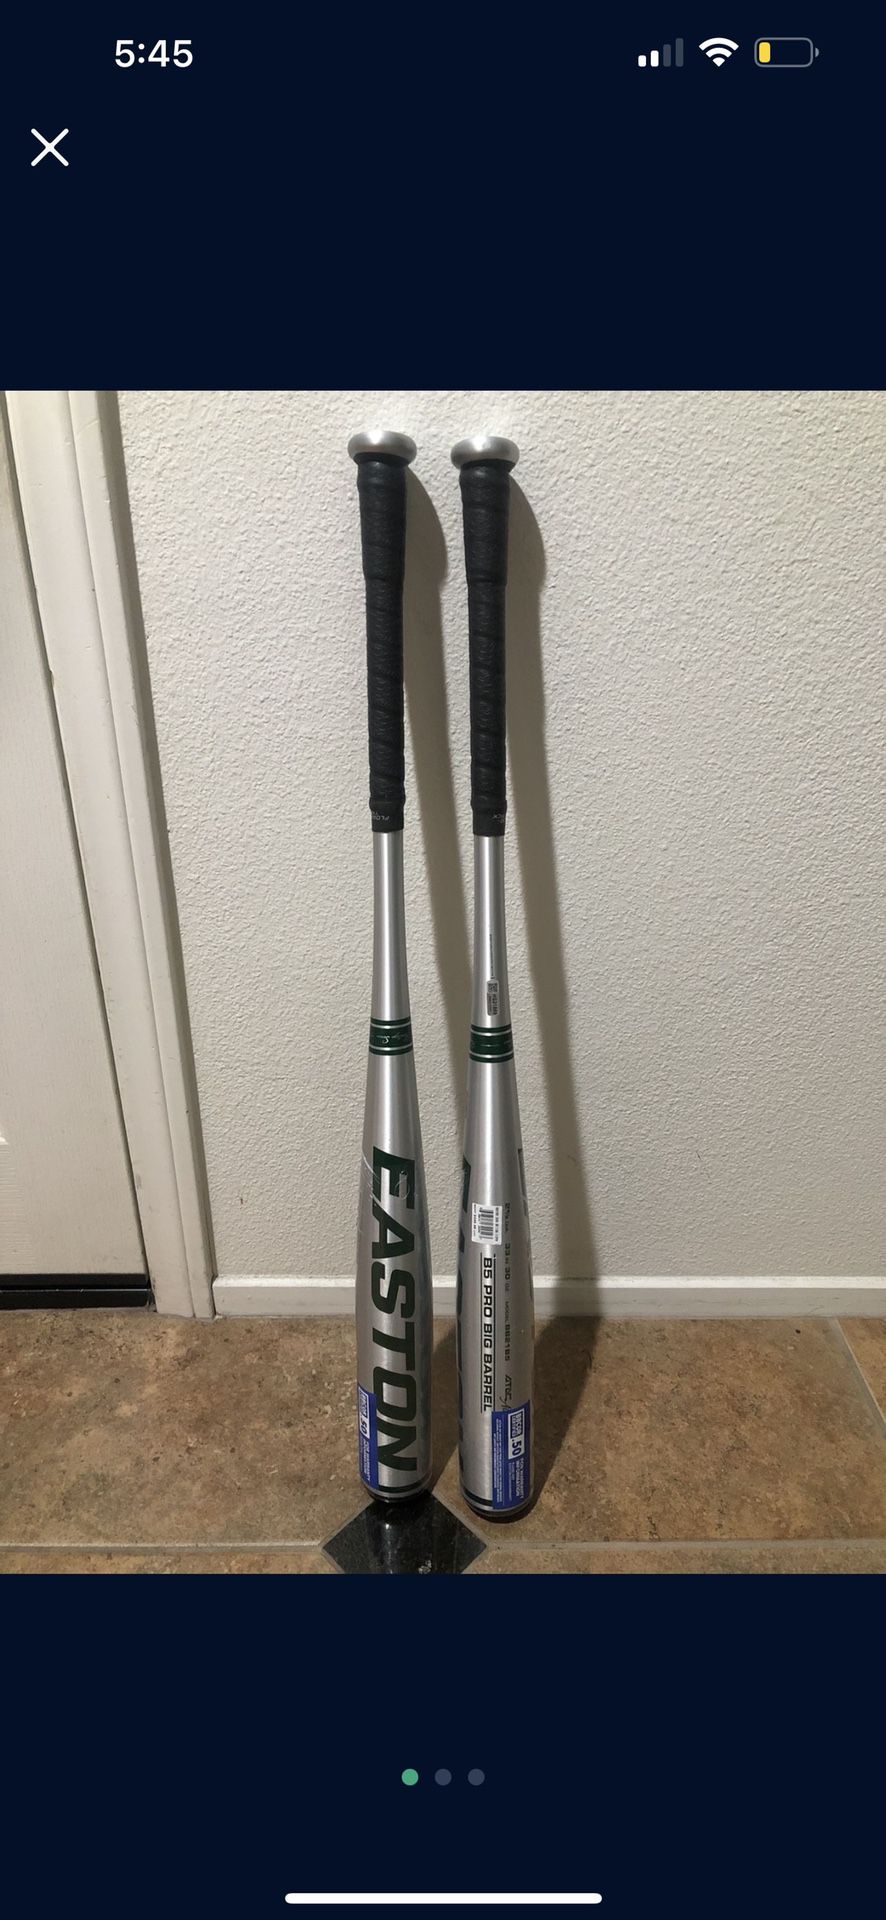 Brand new Baseball bats